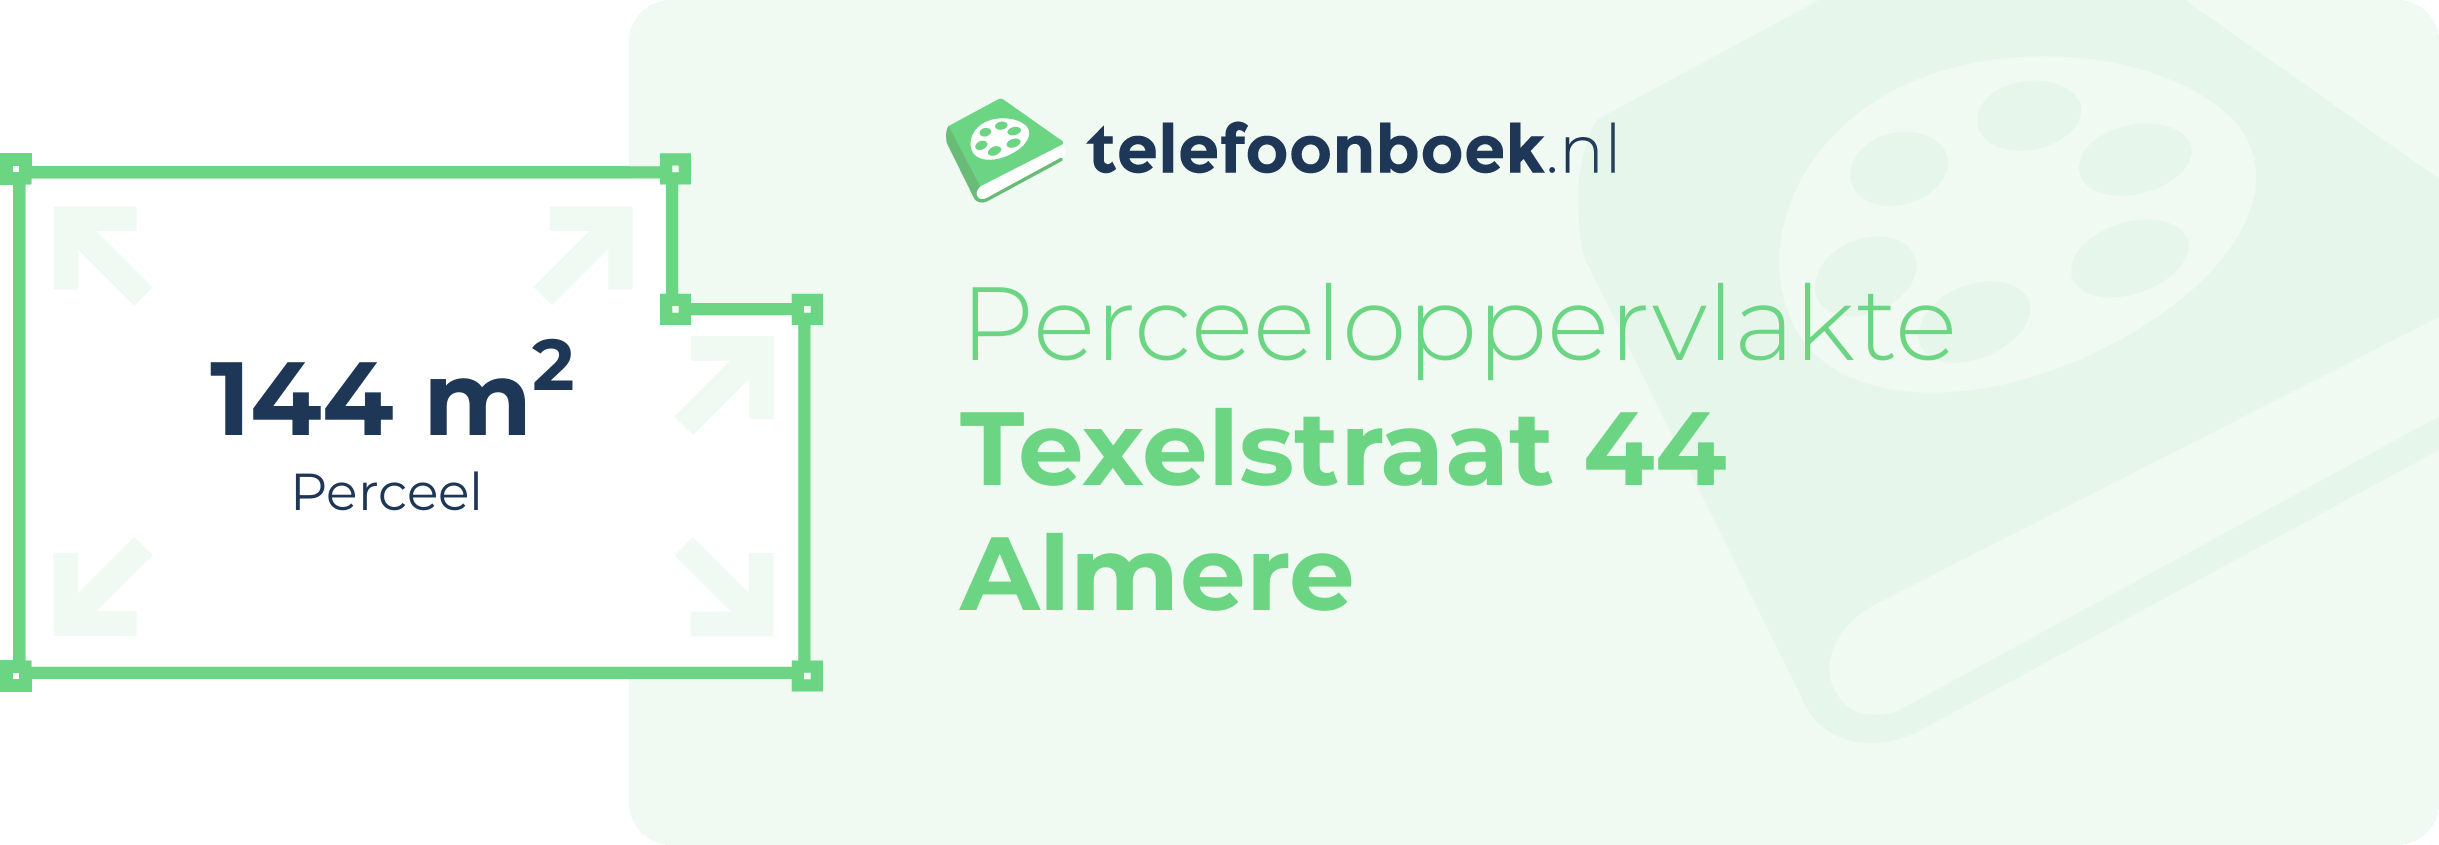 Perceeloppervlakte Texelstraat 44 Almere